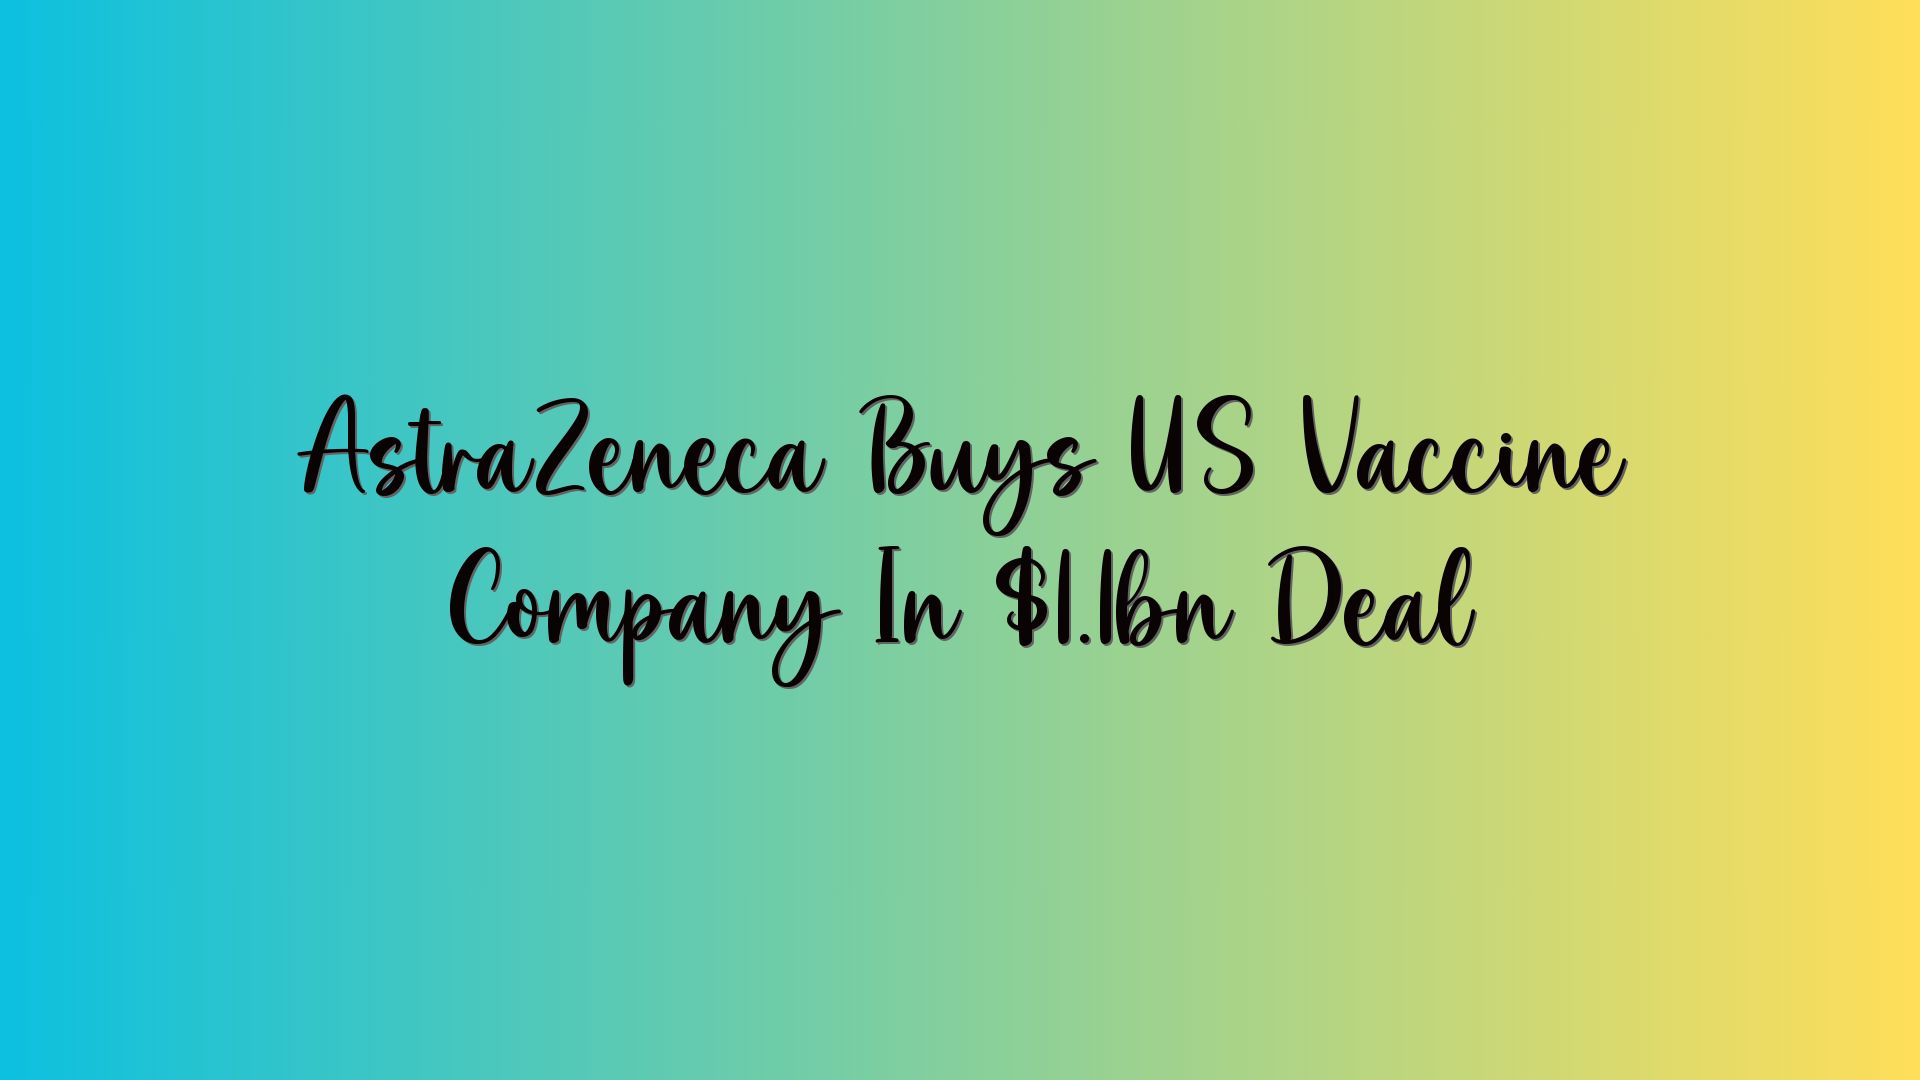 AstraZeneca Buys US Vaccine Company In $1.1bn Deal